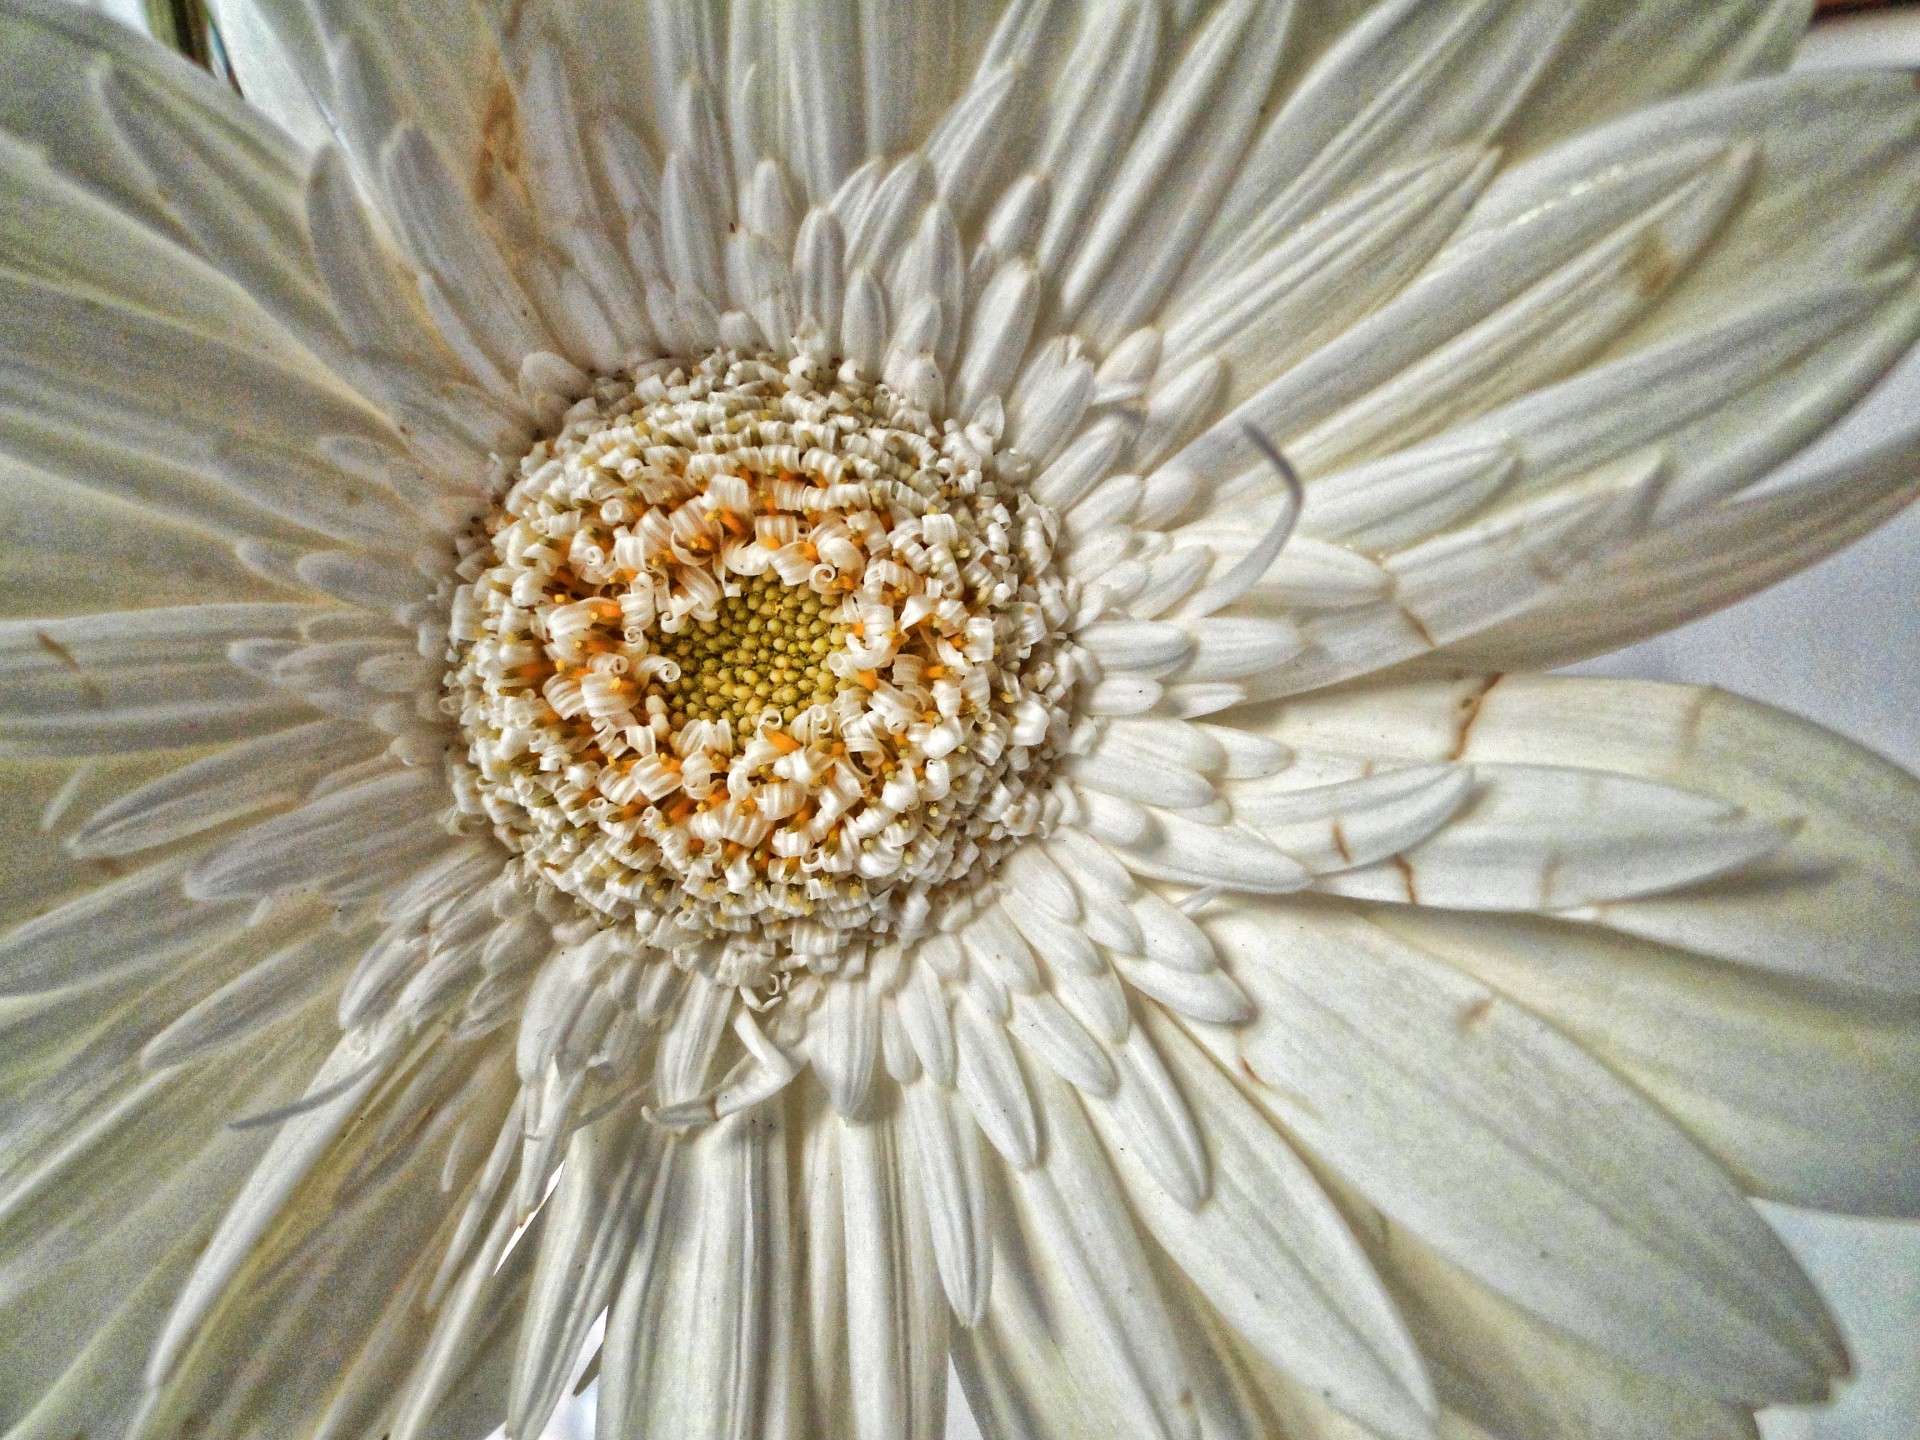 daisy white flower free photo